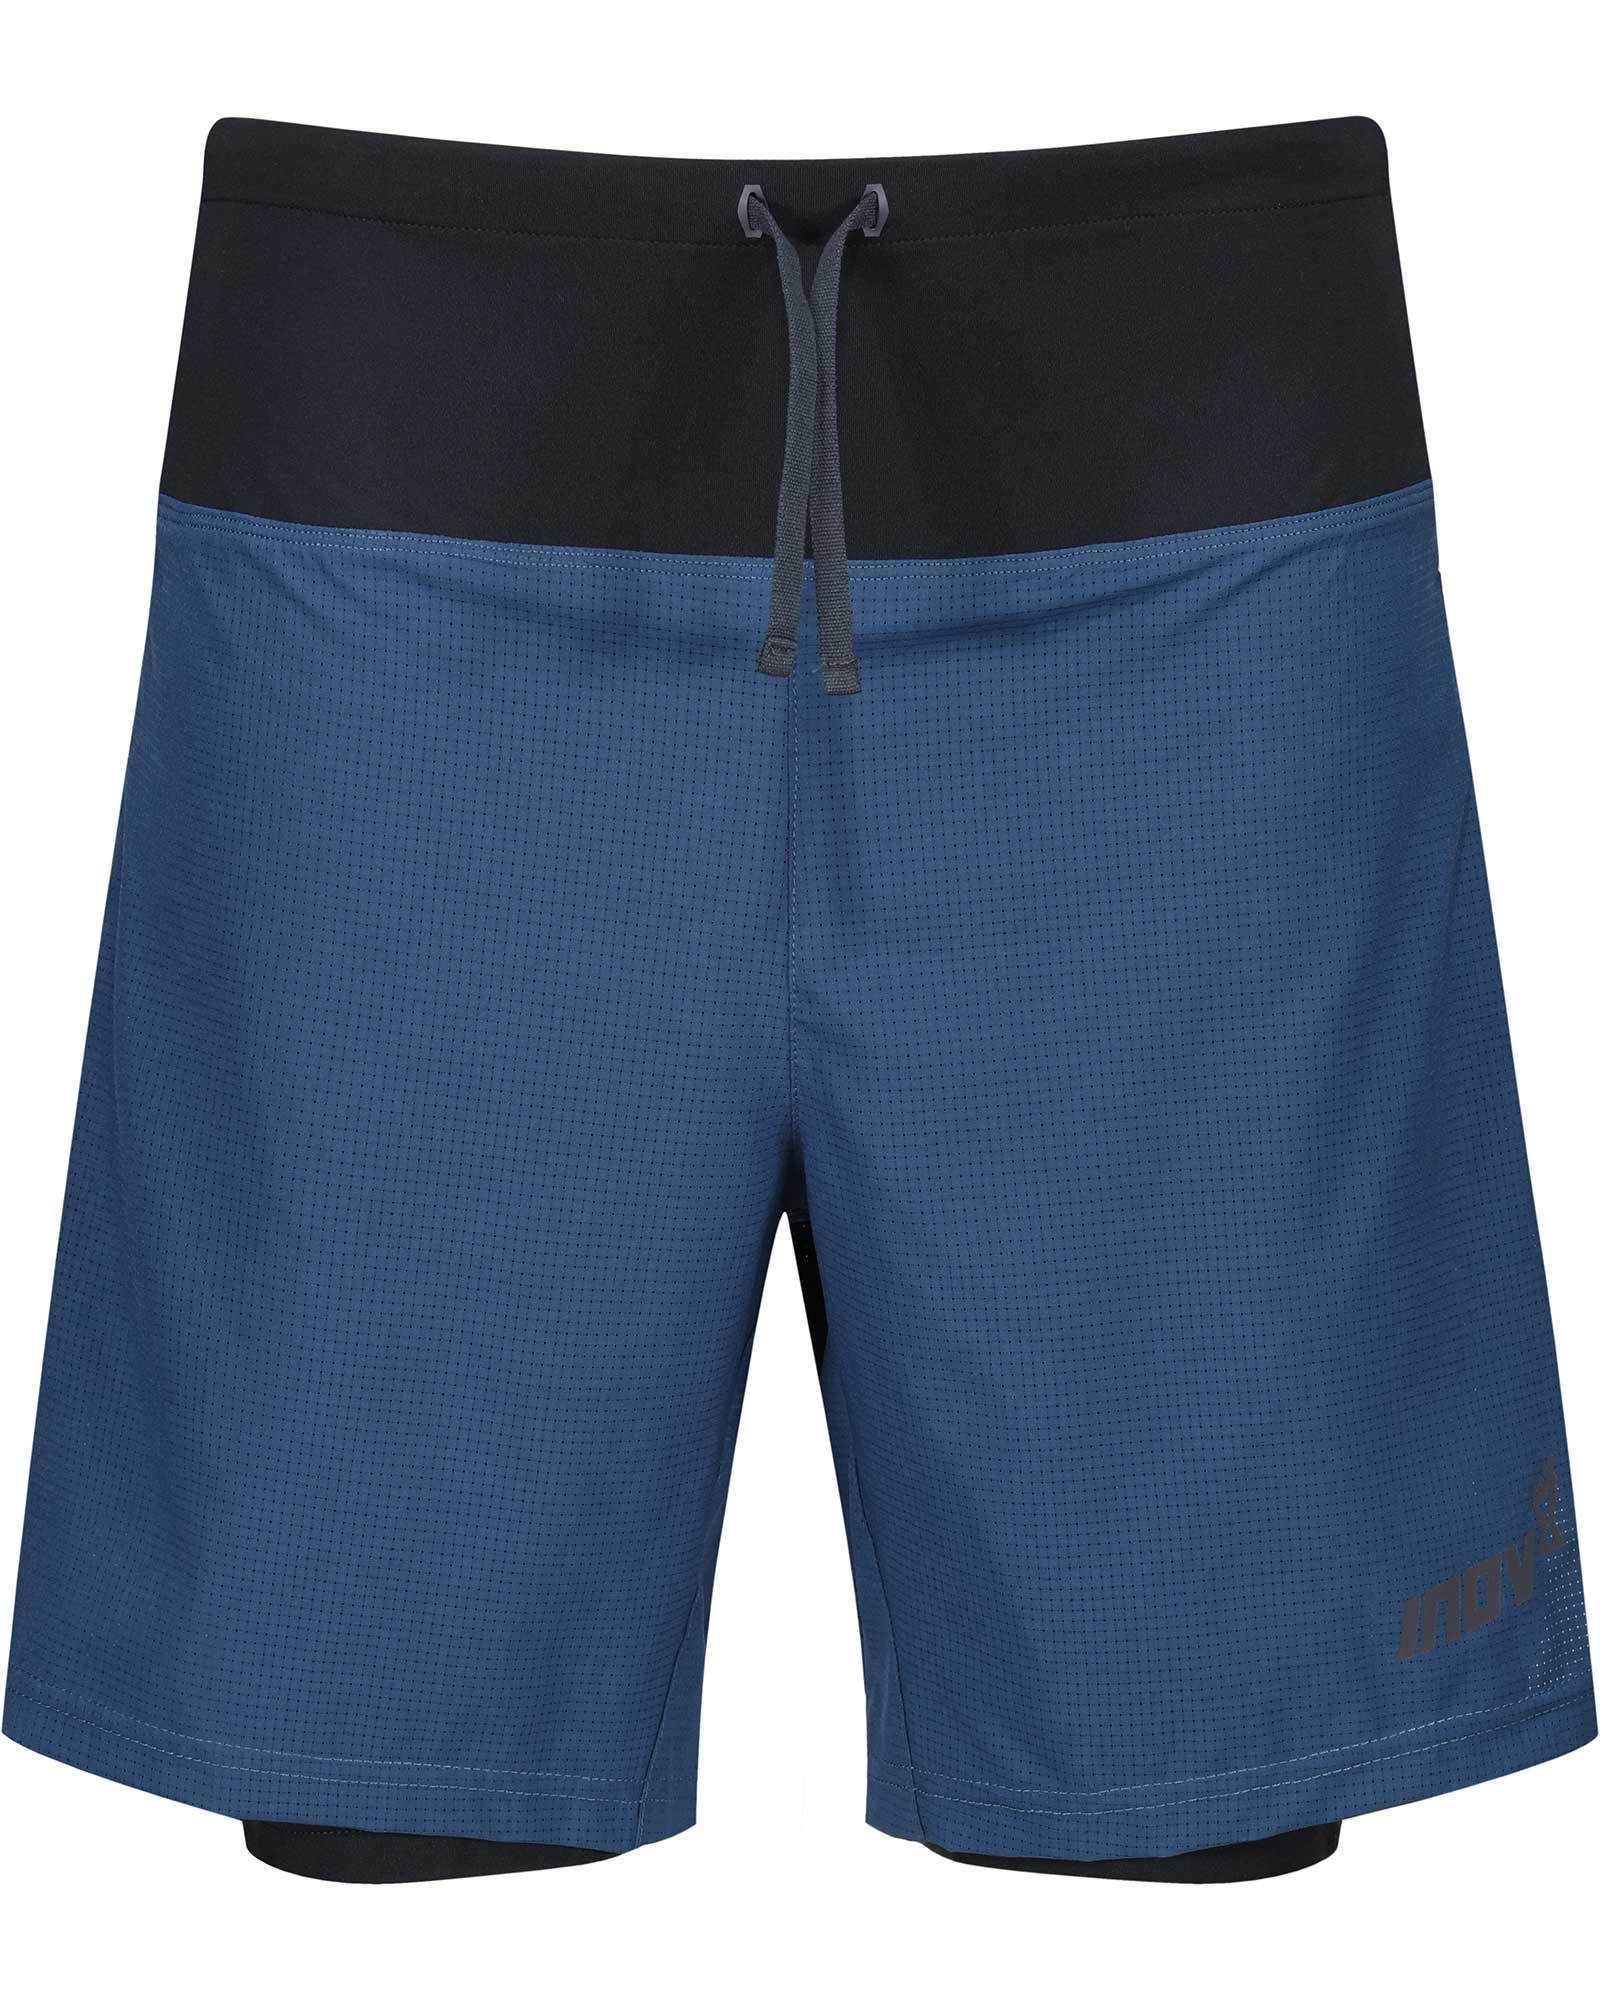 Inov 8 TrailFly Ultra Men’s 7" 2in1 Shorts - Navy S